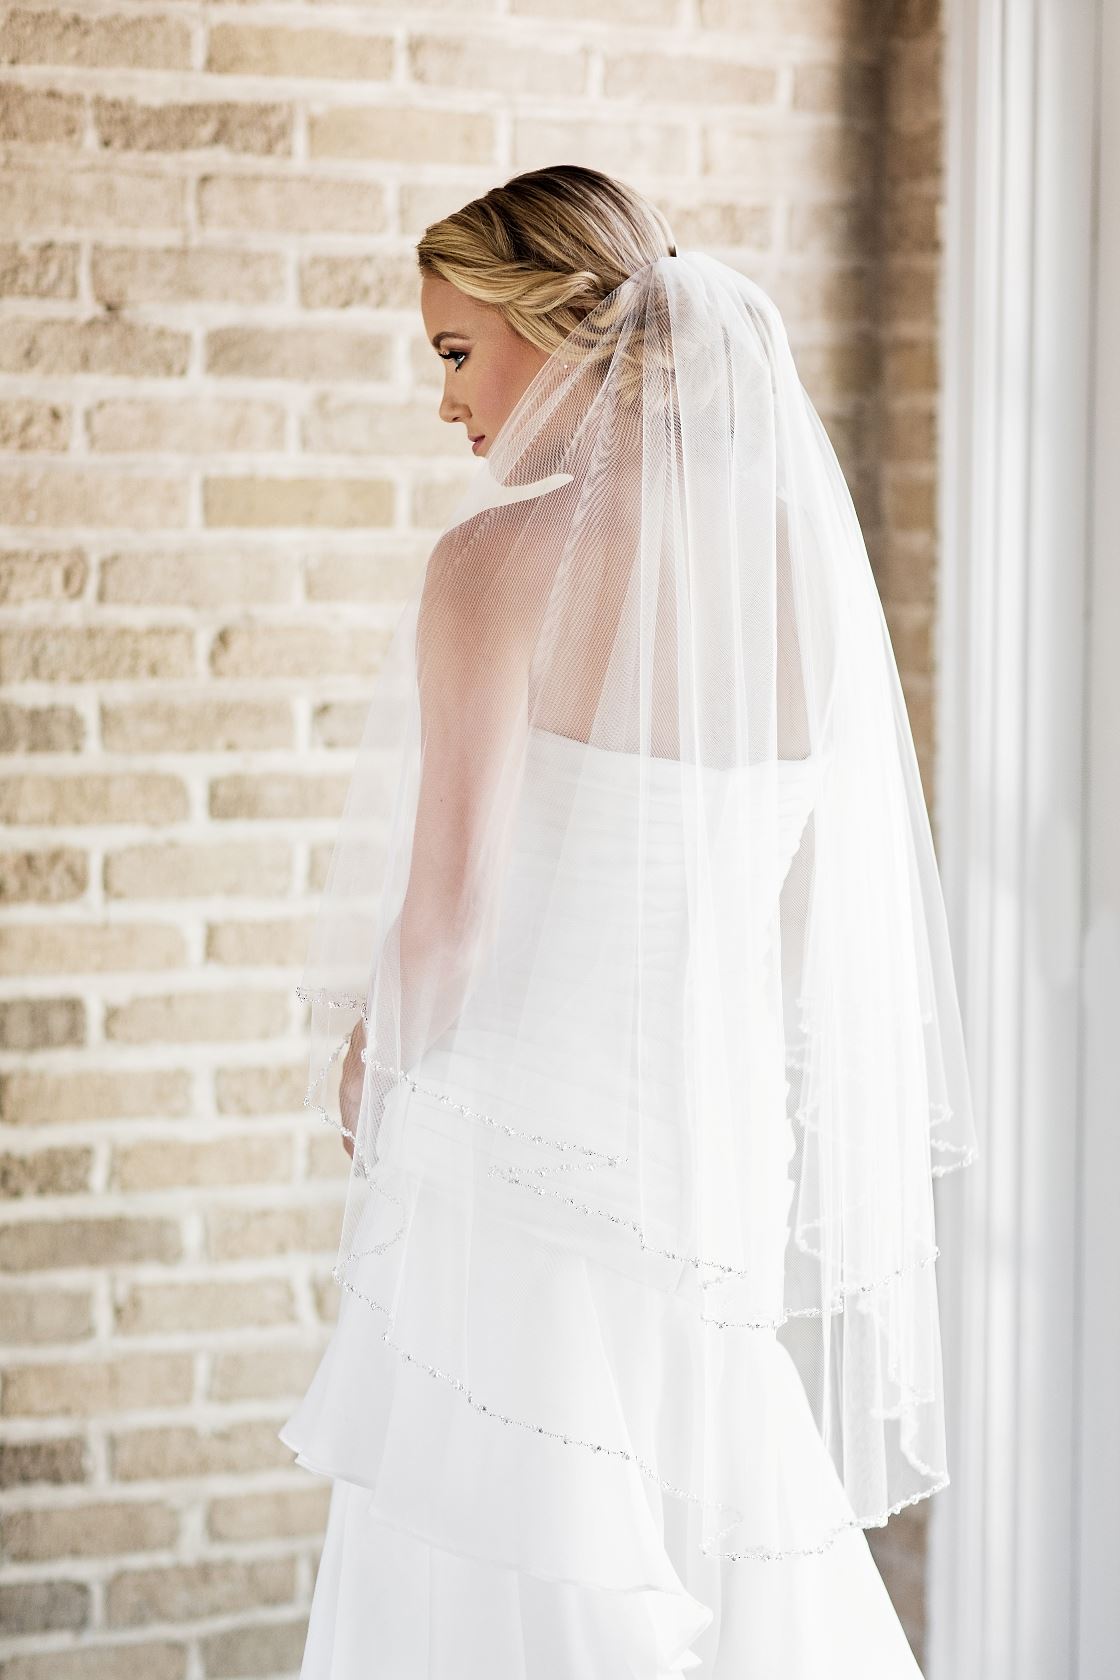 Model wearing white wedding dress and veil